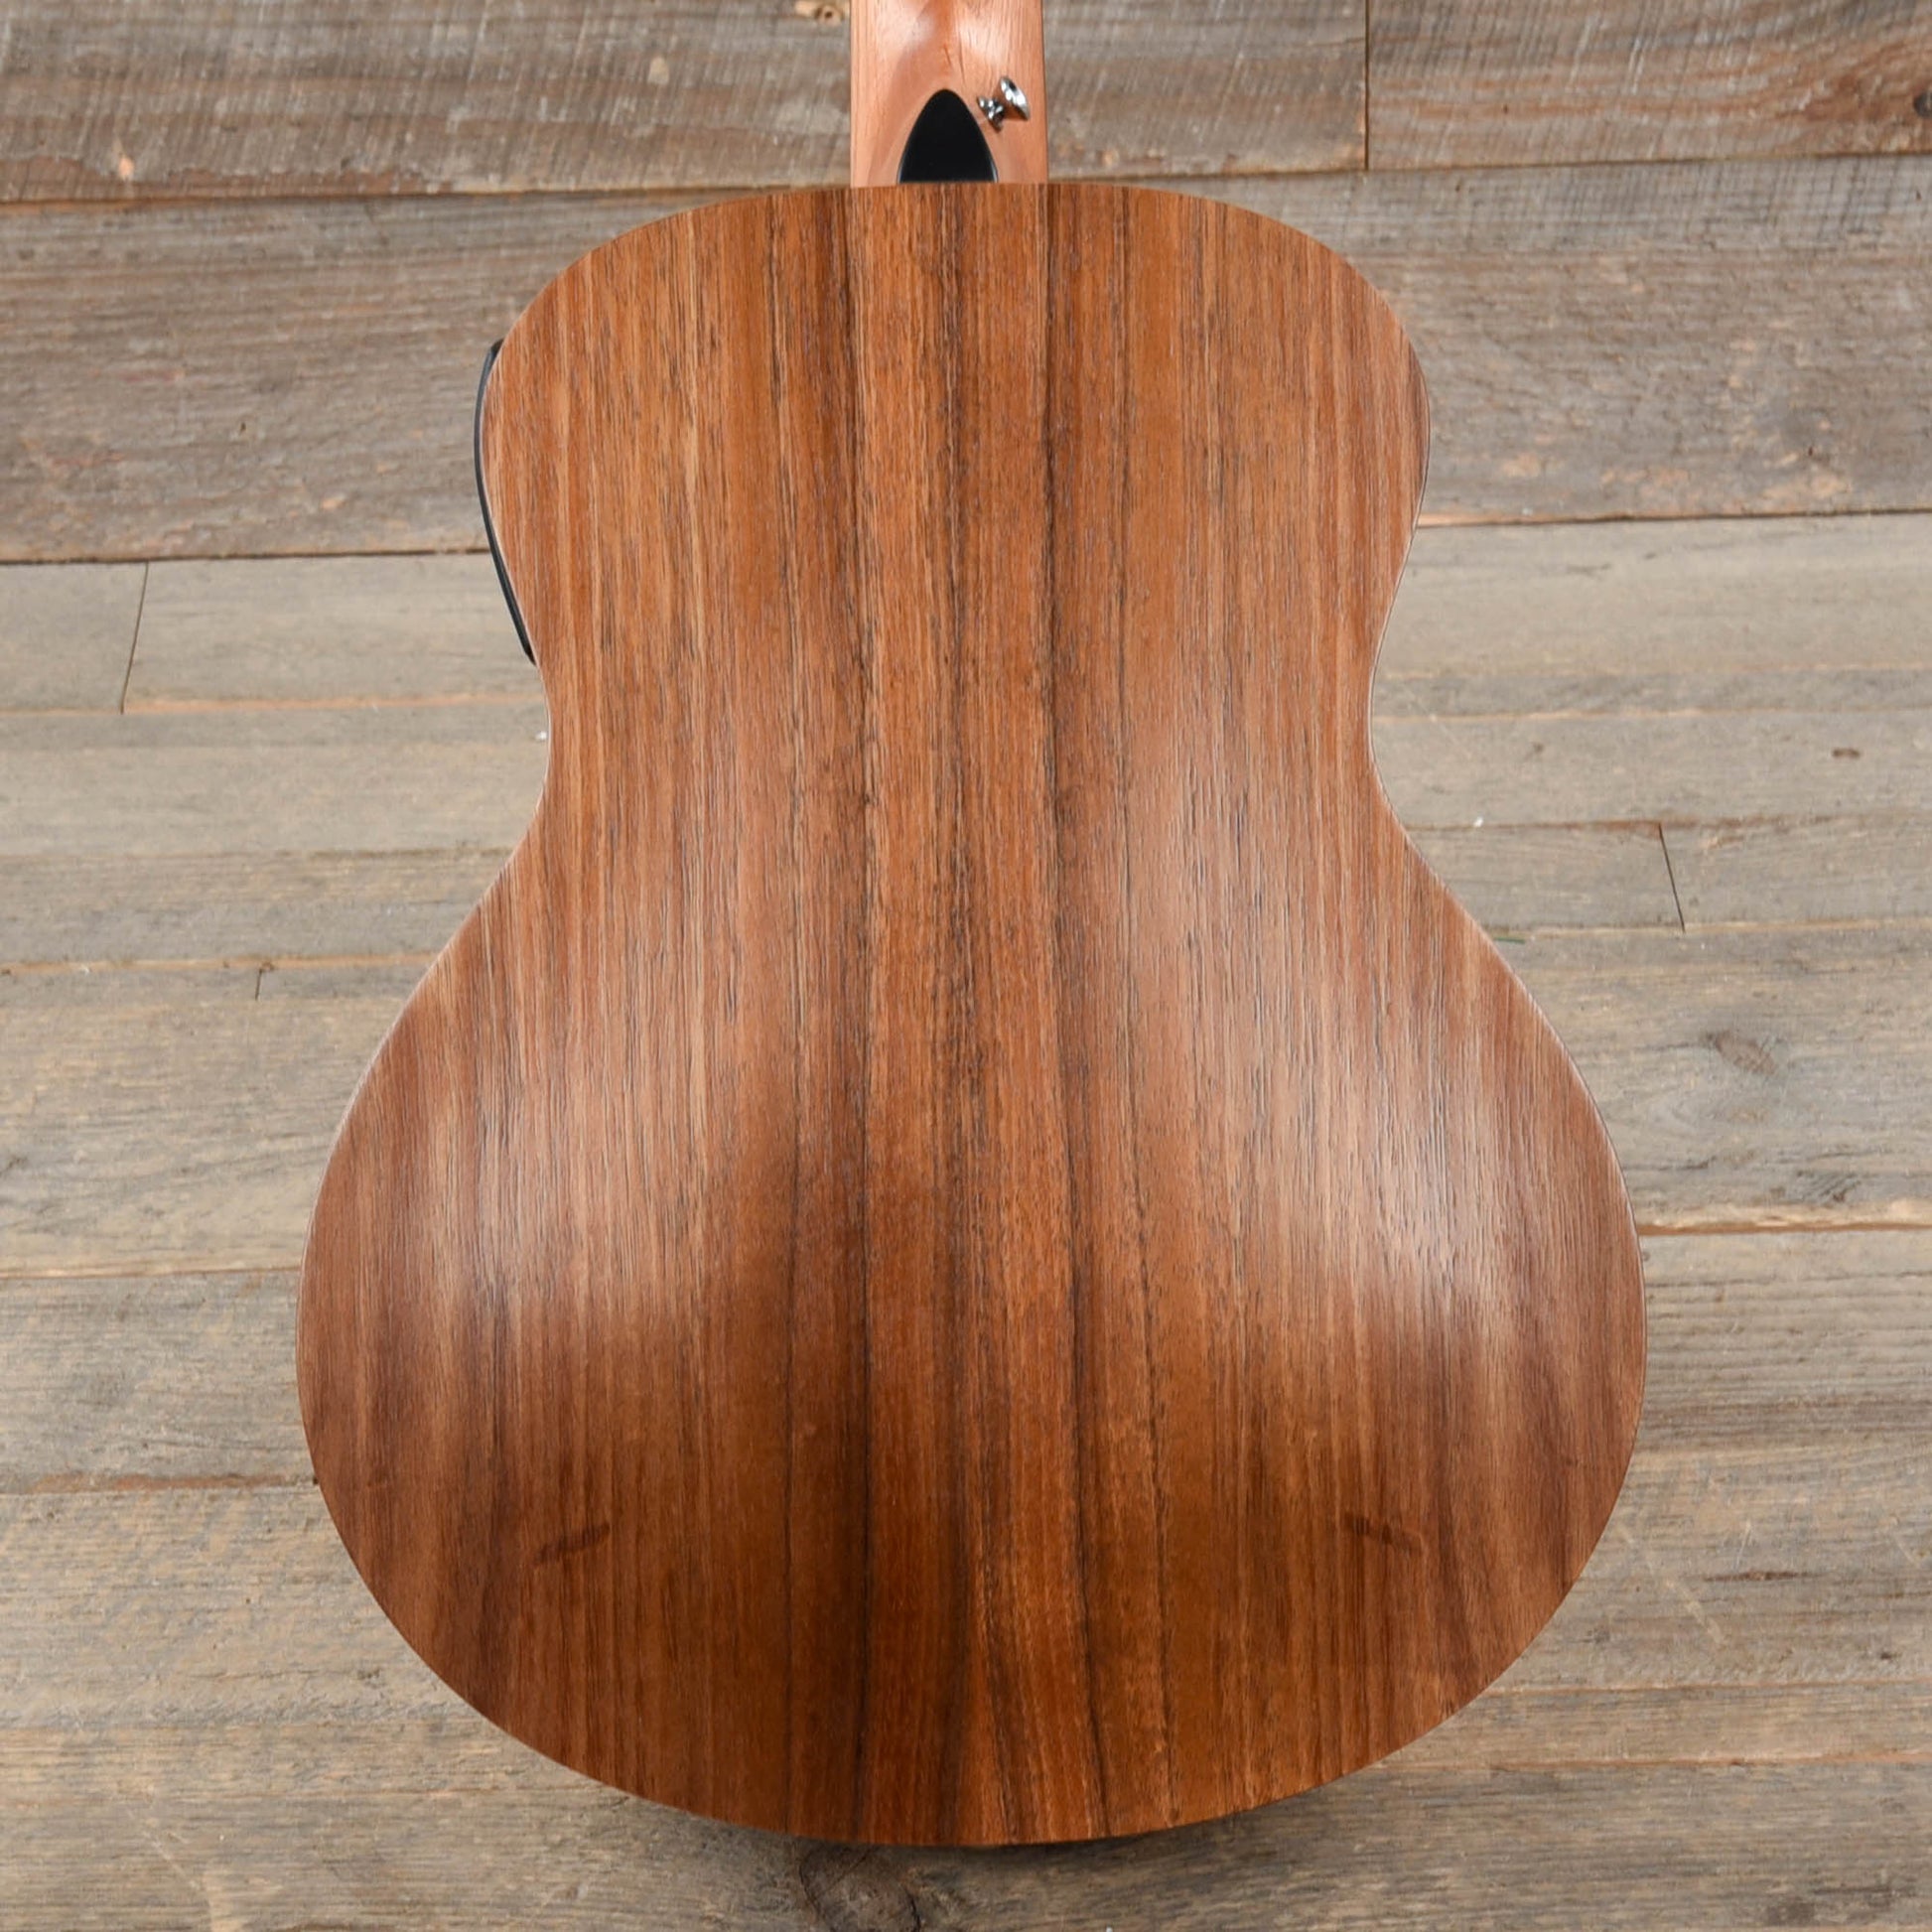 Taylor GS Mini-e Koa LEFTY Natural w/ES-B & Gig Bag Acoustic Guitars / Mini/Travel